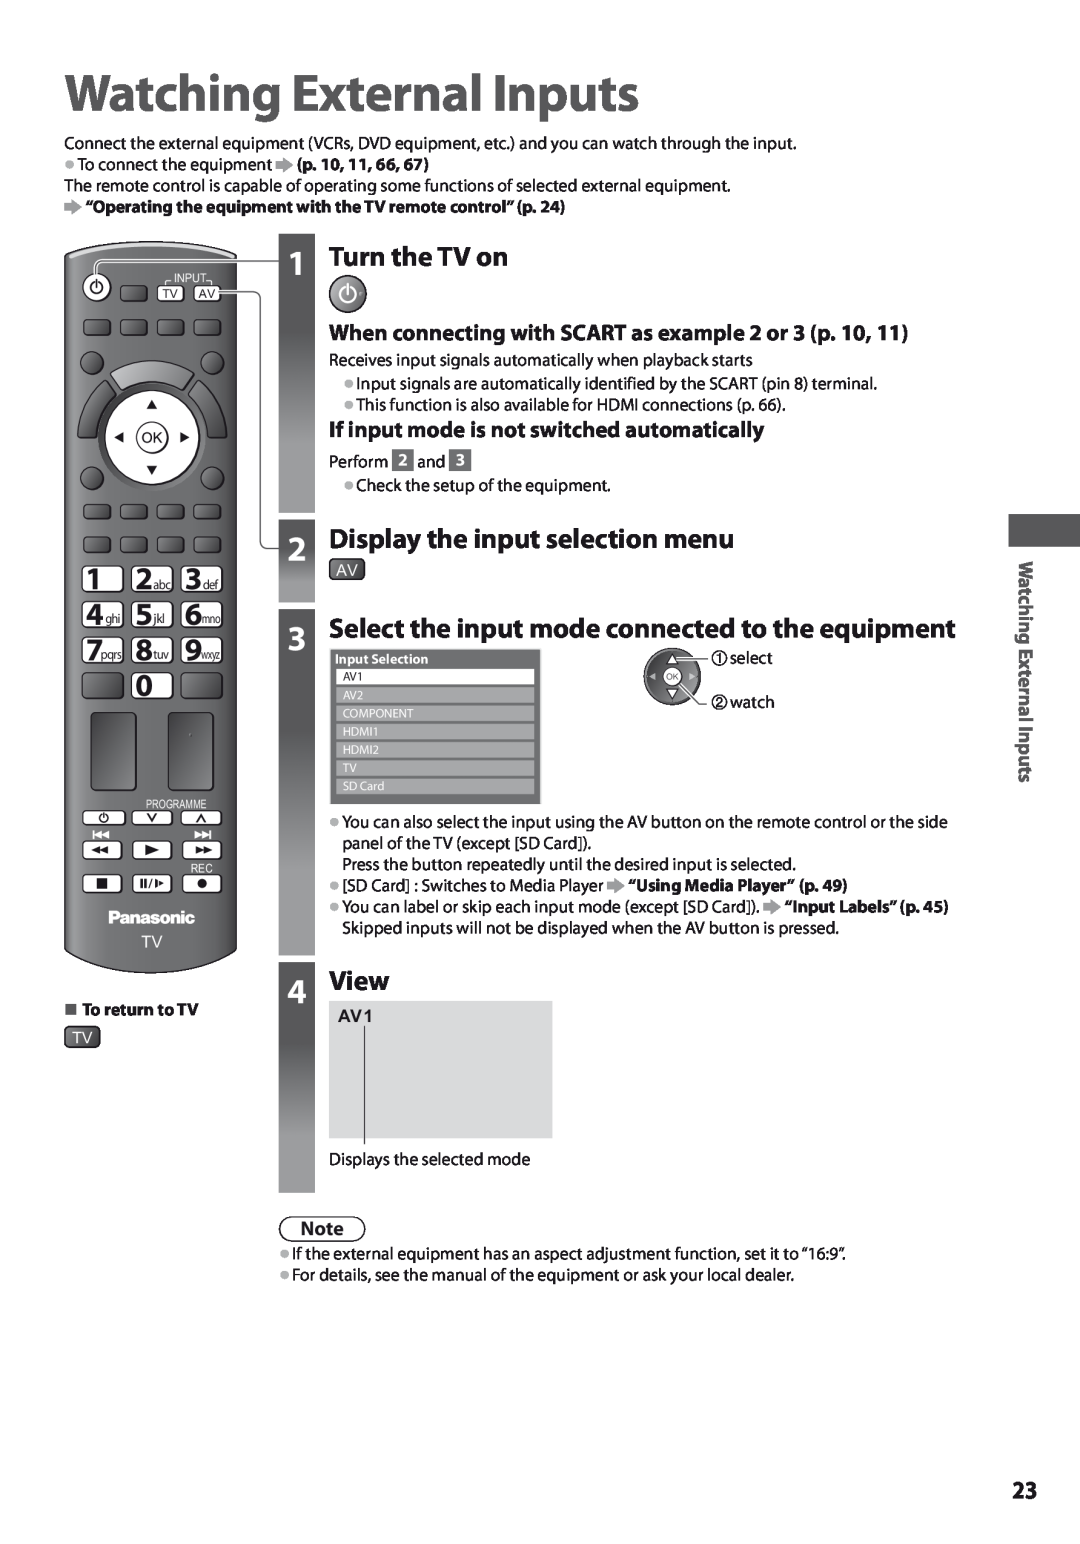 Panasonic TX-L37U3E Watching External Inputs, Turn the TV on, Display the input selection menu, View, p. 10, 11, 66 